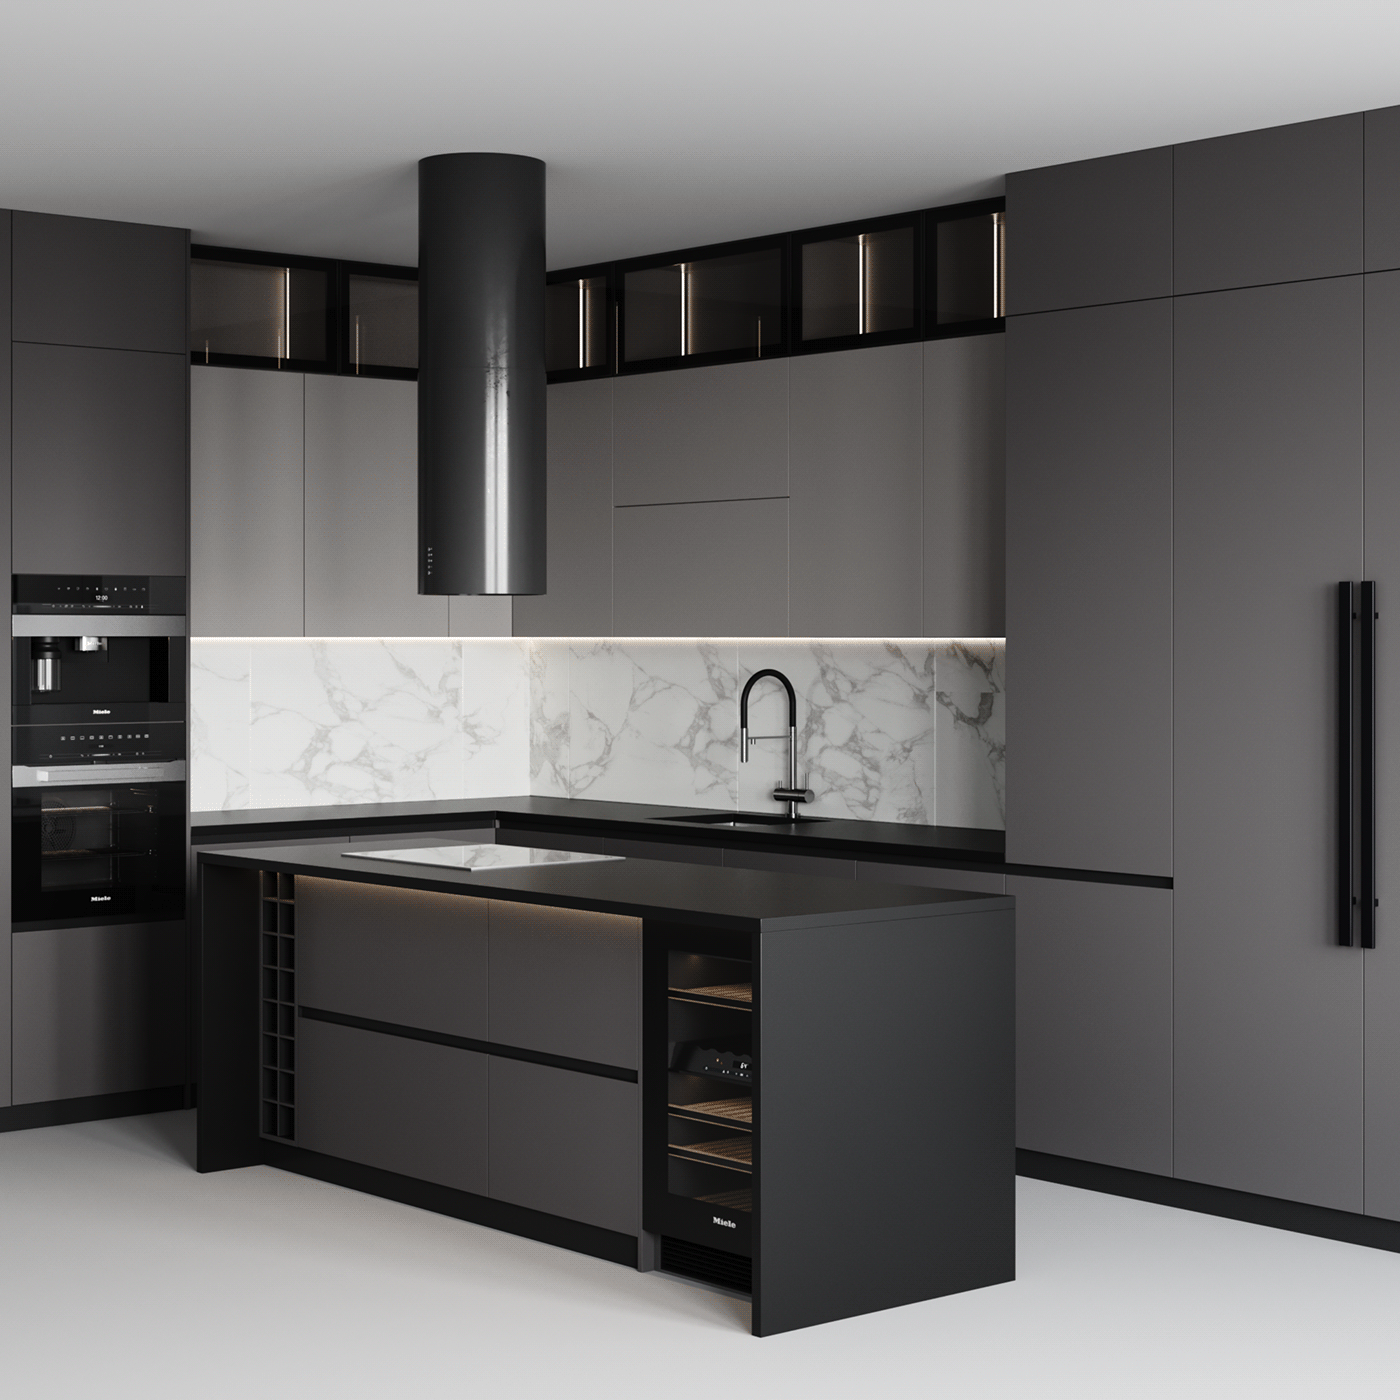 3dmodeling corona kitchen kitchen design modern kitchen Render archviz Interior visualization